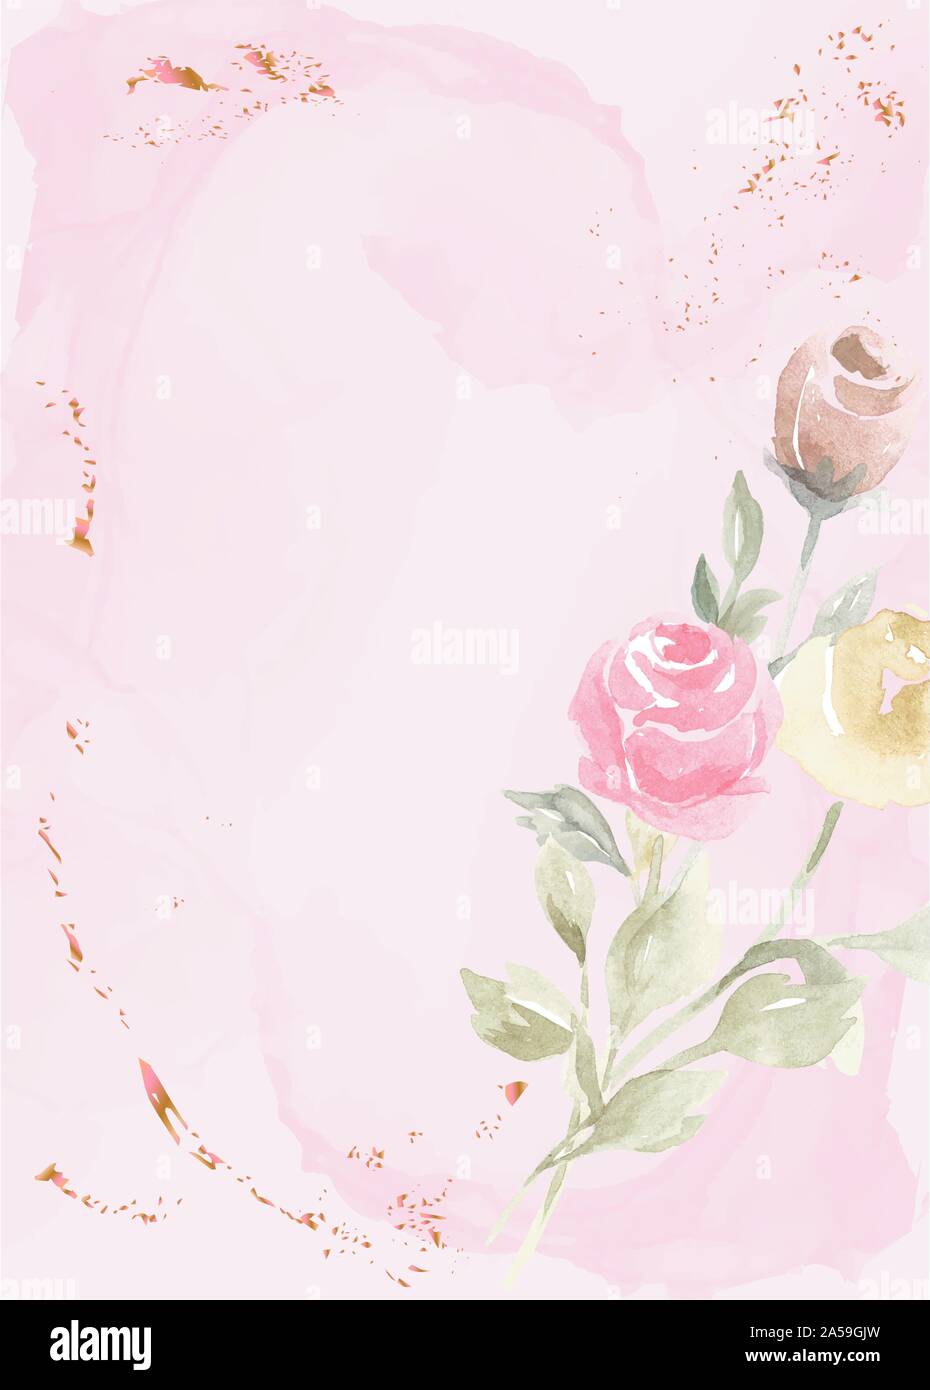 Die vertikale Vektor Pastell rosa Hintergrund mit gezogenen Rose Blume Illustration Stock Vektor